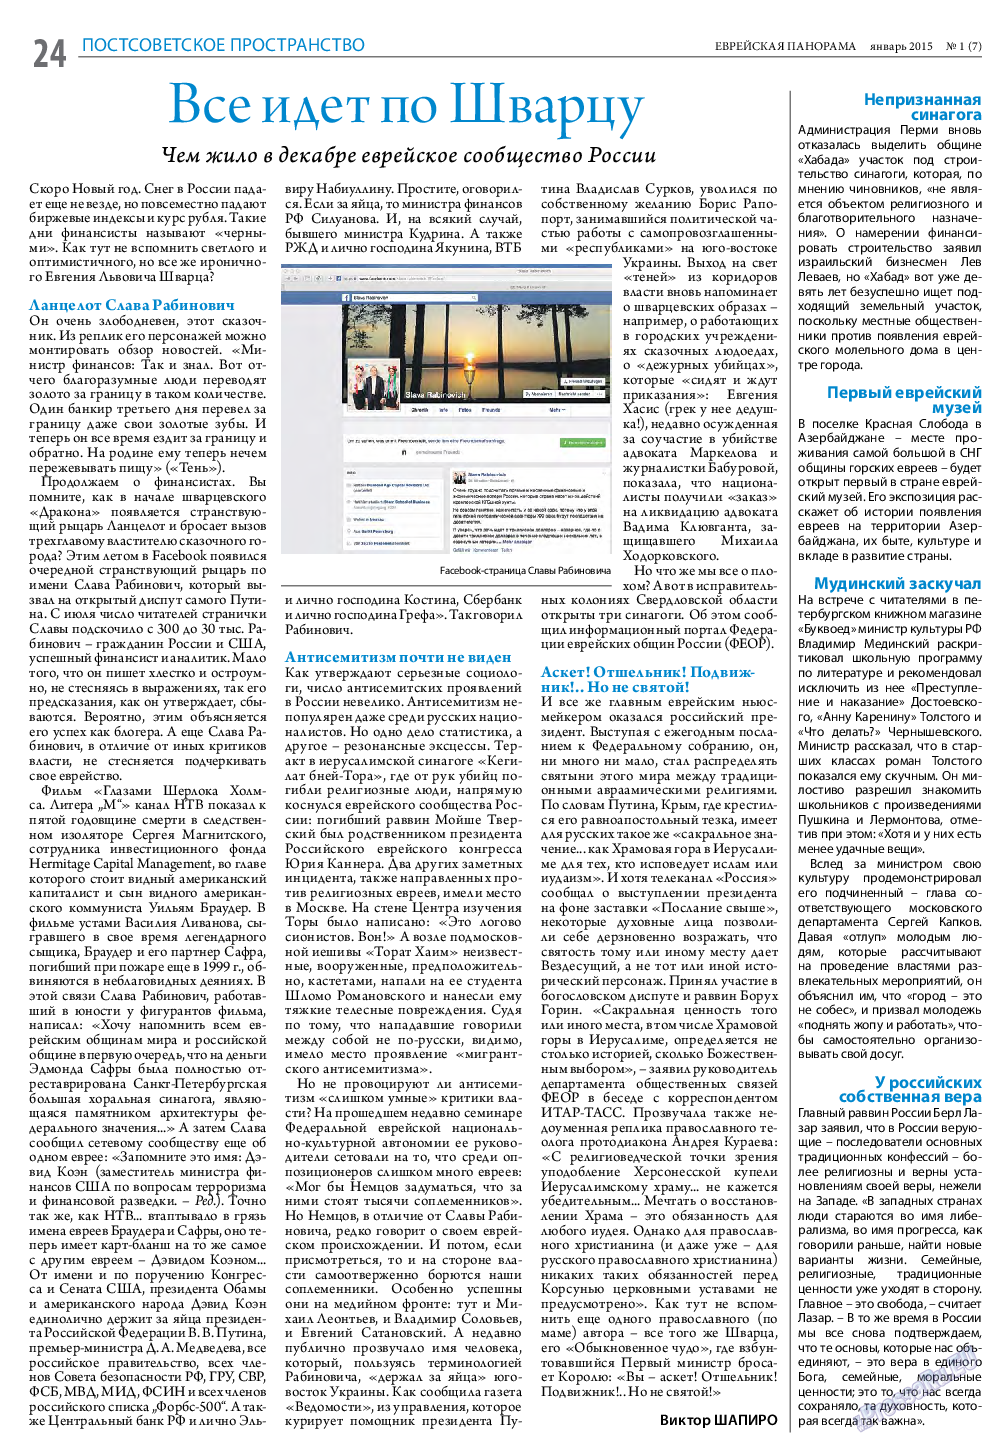 Еврейская панорама, газета. 2015 №1 стр.24